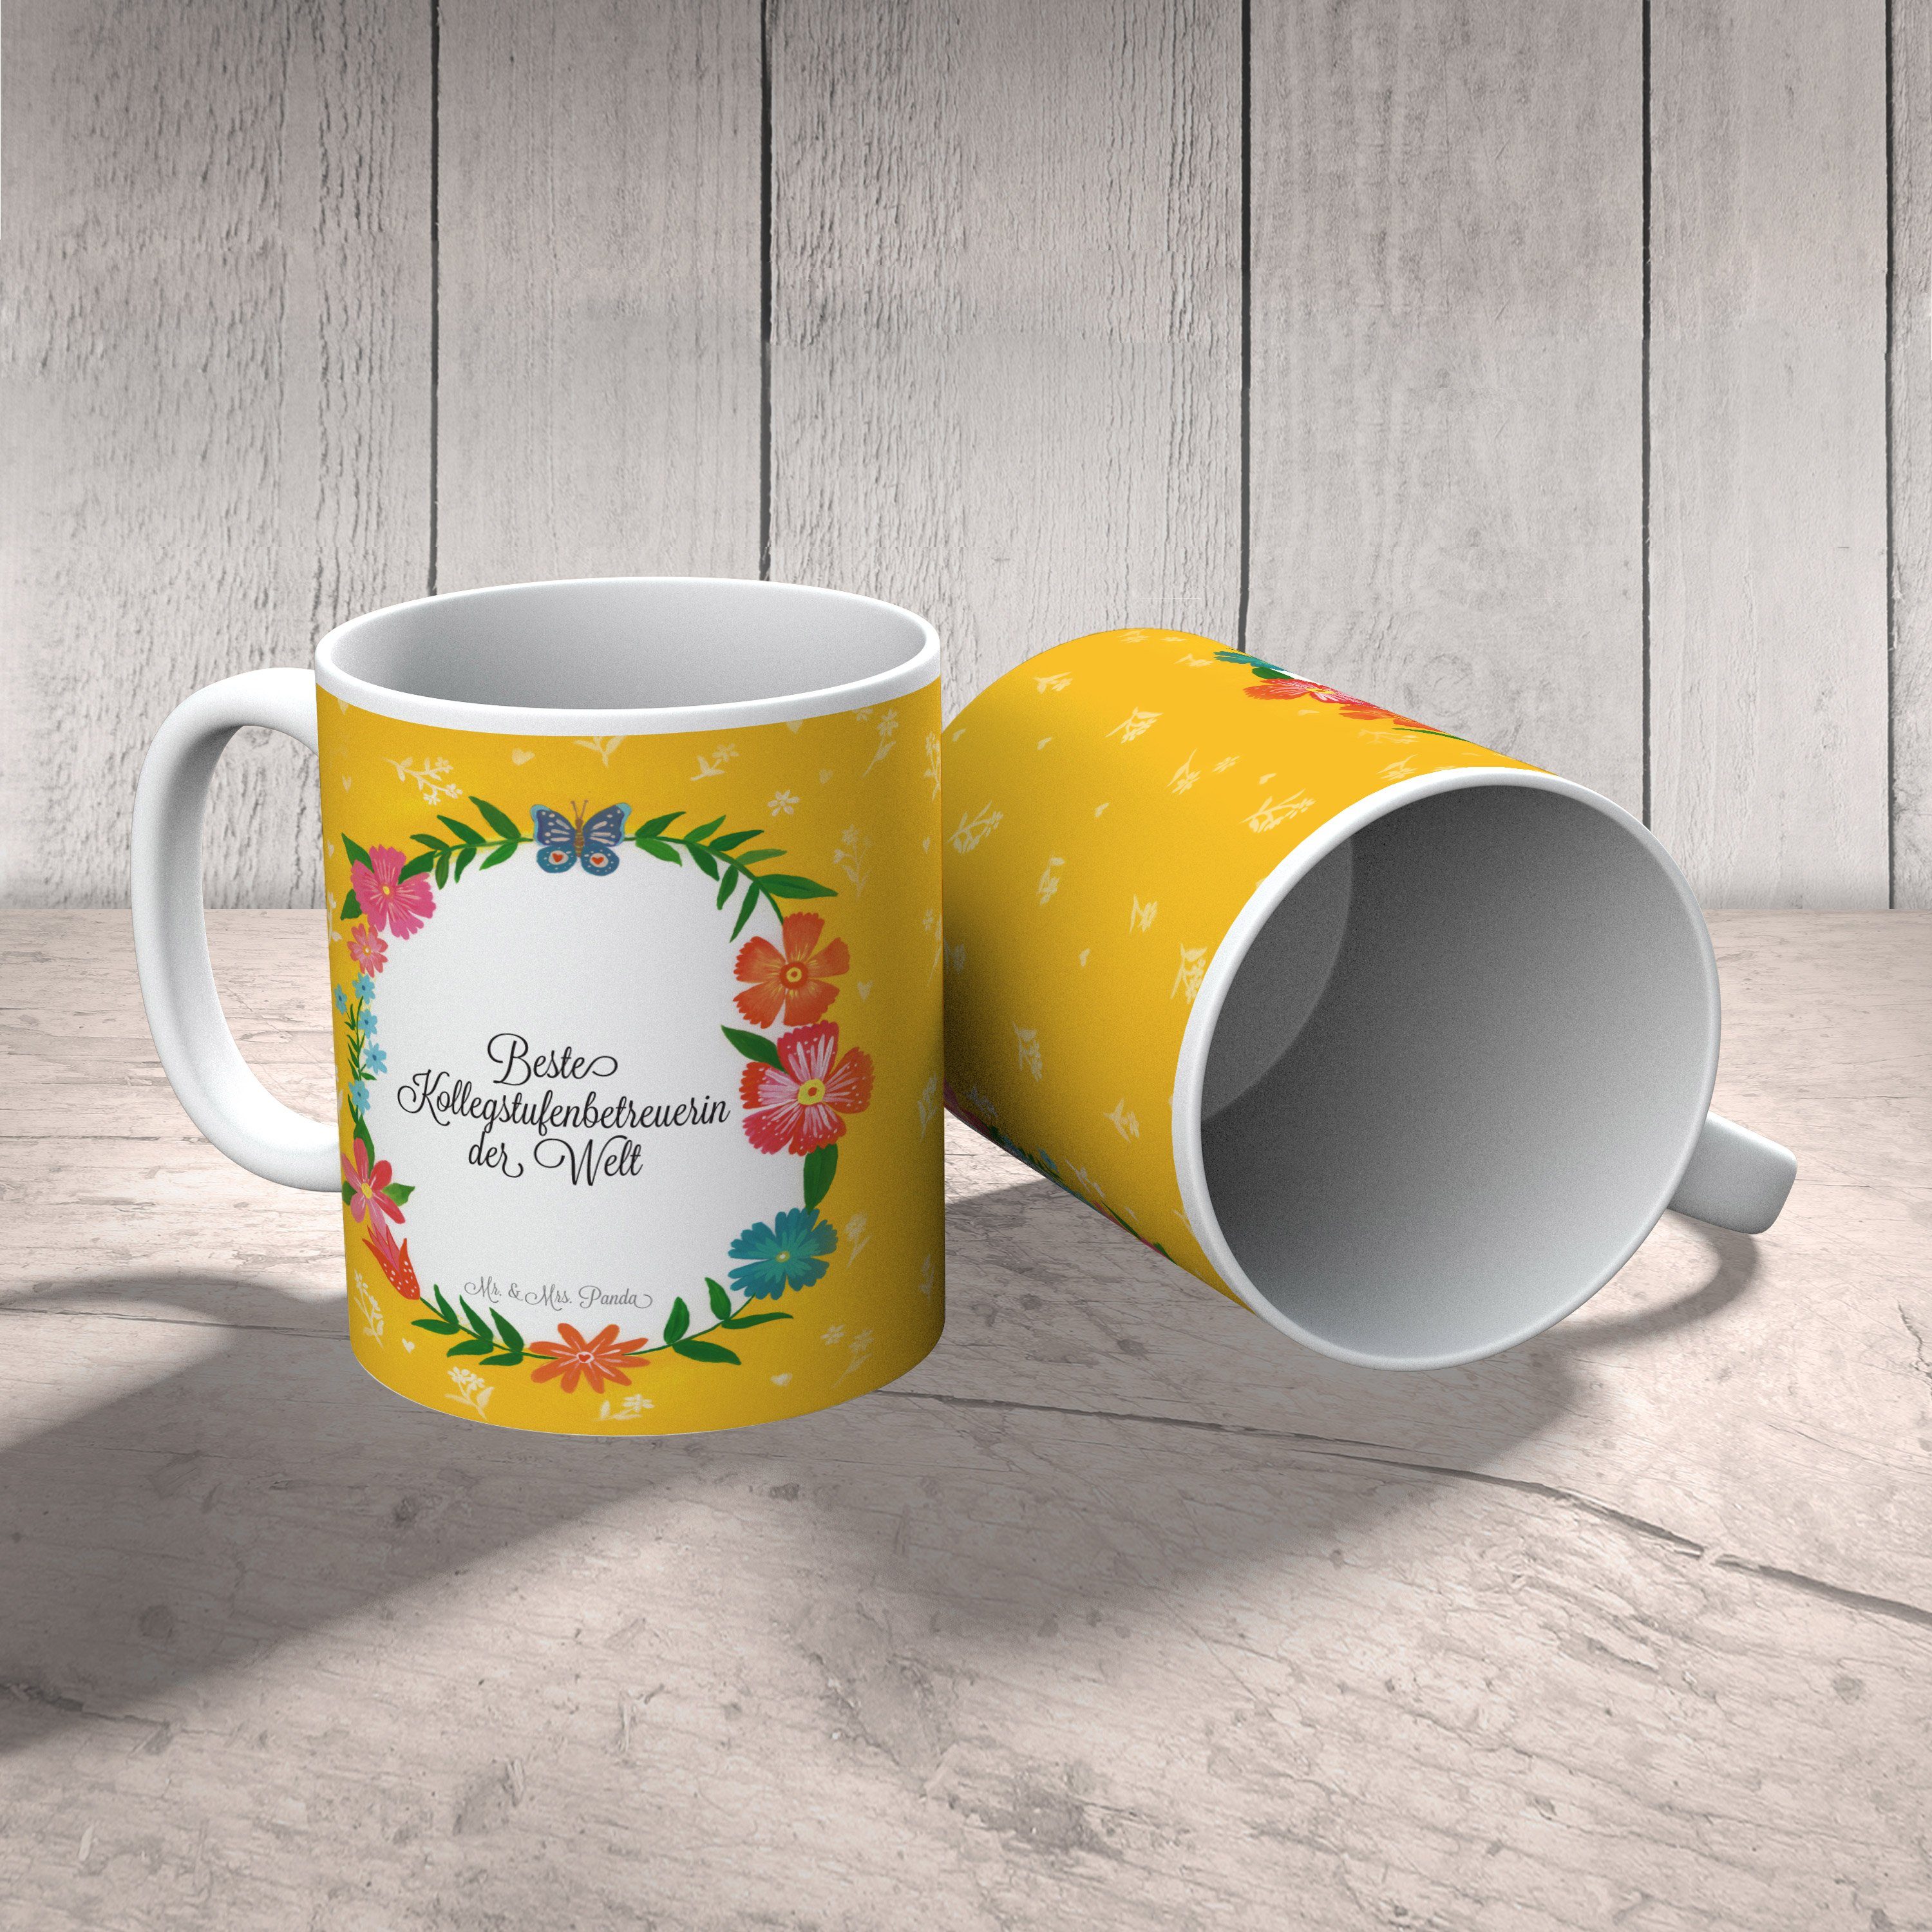 Mr. & Mrs. Panda Sc, Berufsausbildung, - Kollegstufenbetreuerin Kaffeebecher, Tasse Keramik Geschenk